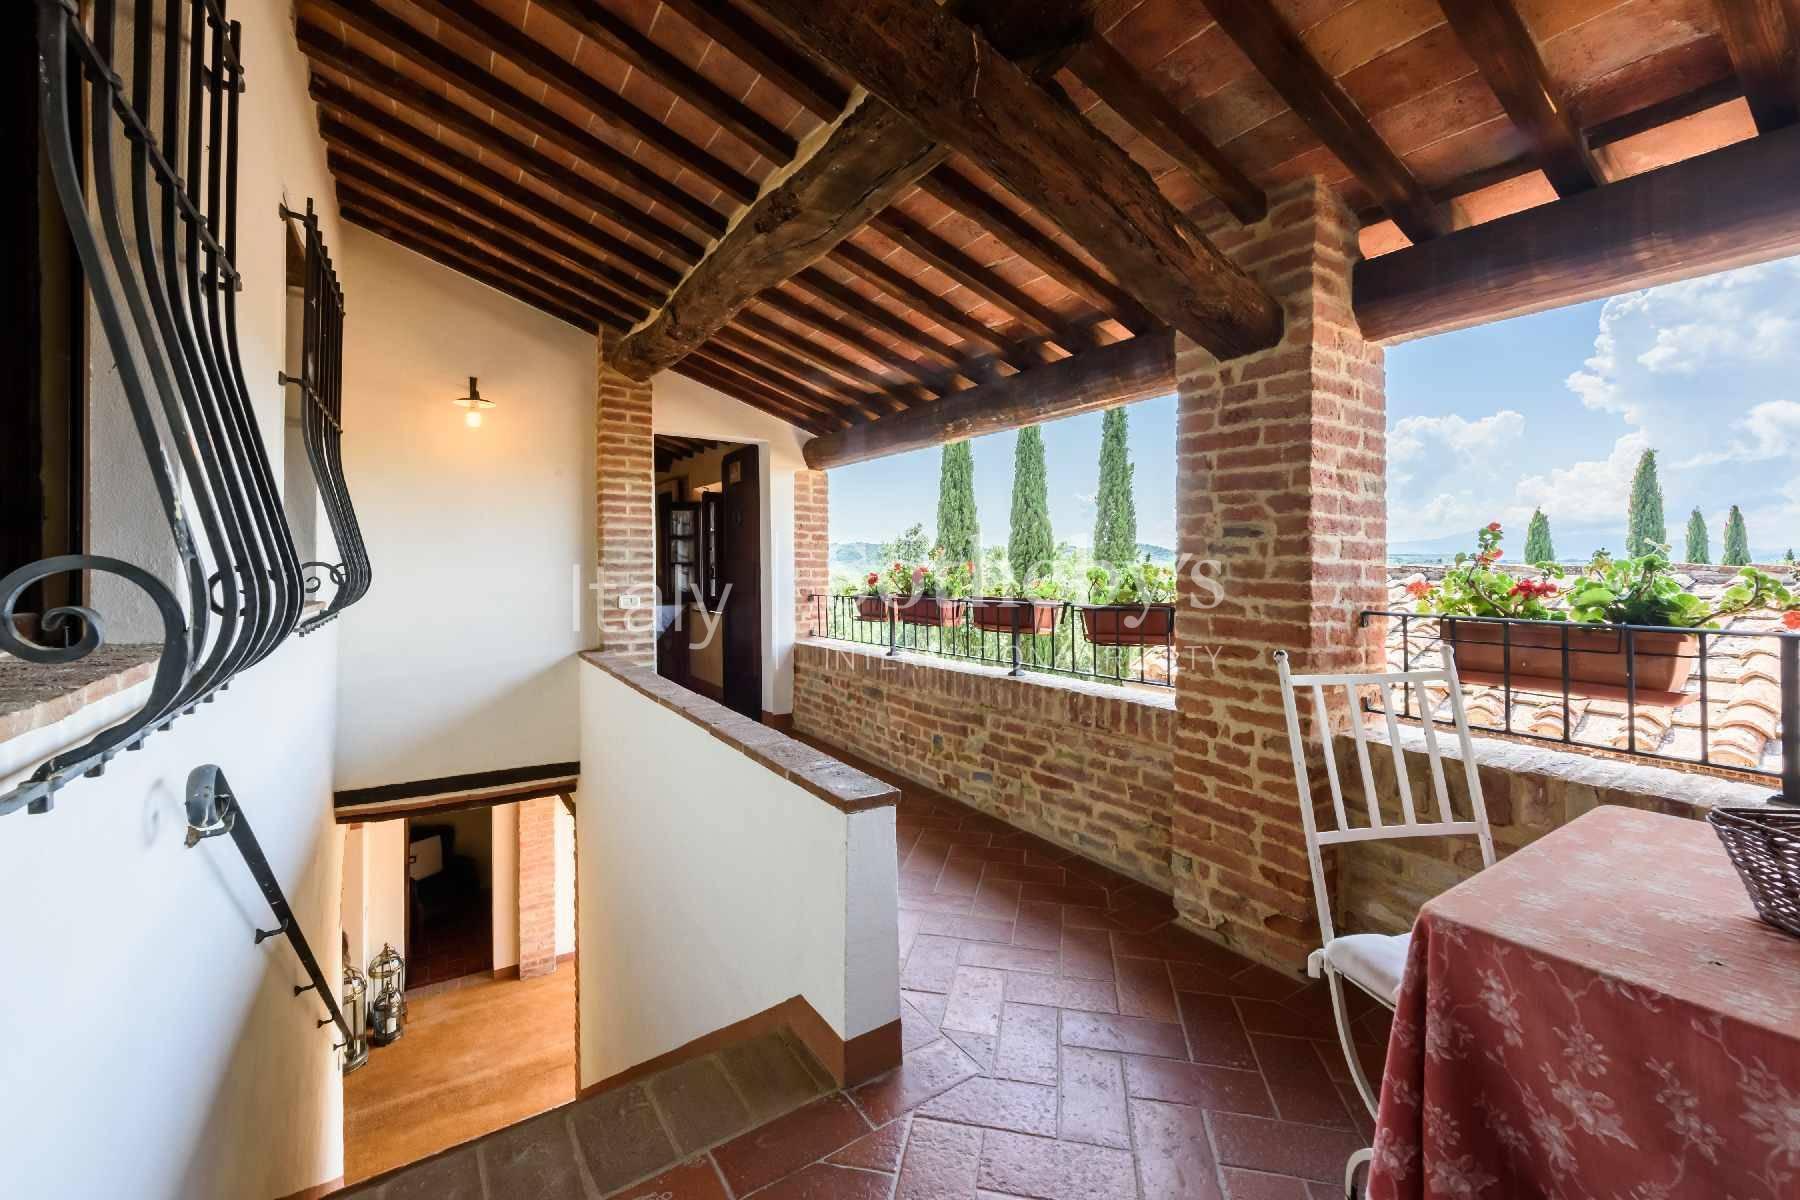 Historic farmhouse with views of Siena - 30